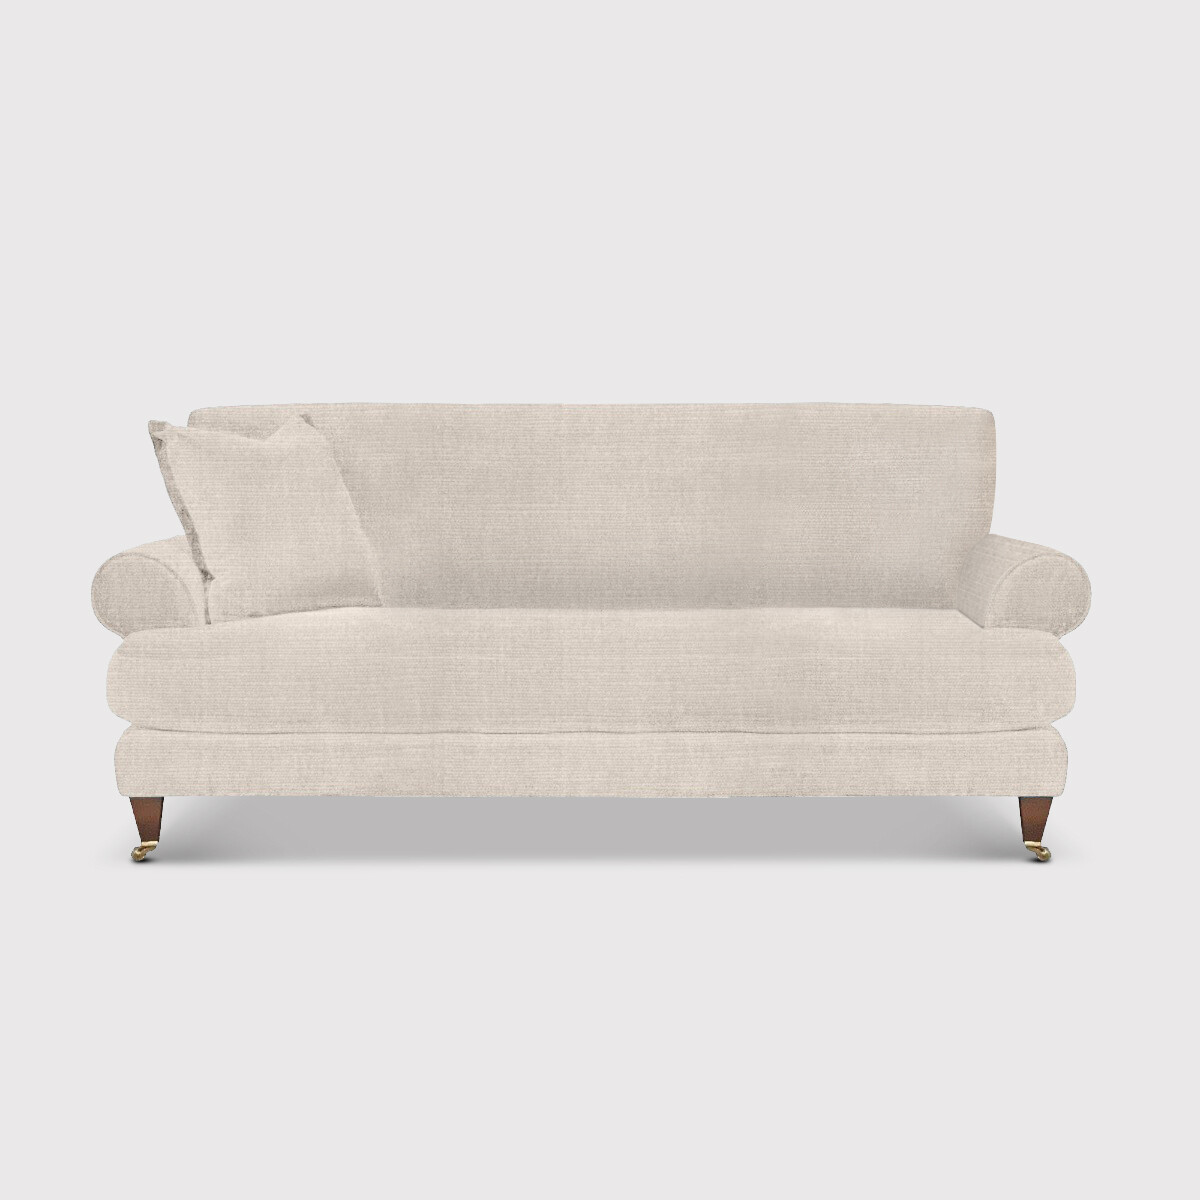 Fairlawn 2 Seater Sofa, Neutral Fabric | Barker & Stonehouse